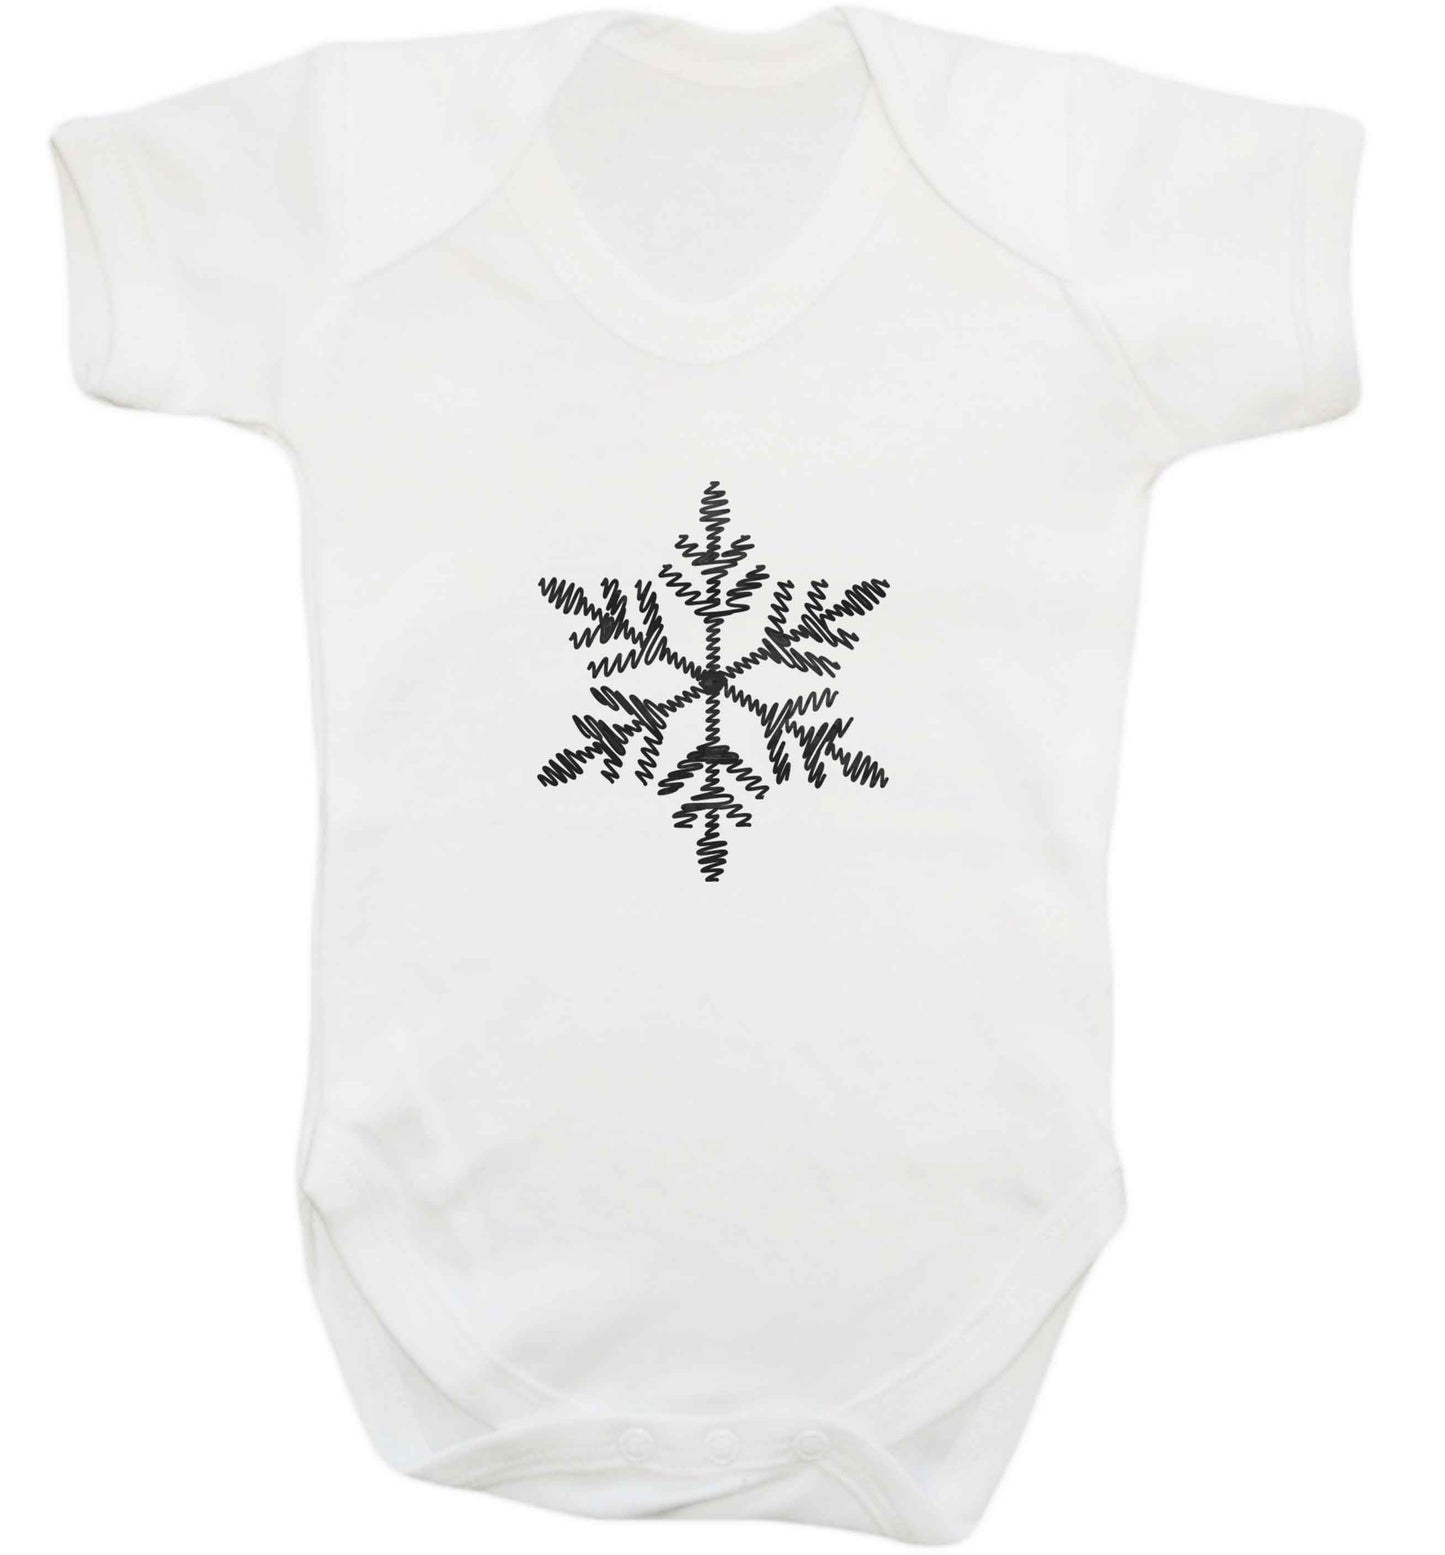 Snowflake baby vest white 18-24 months